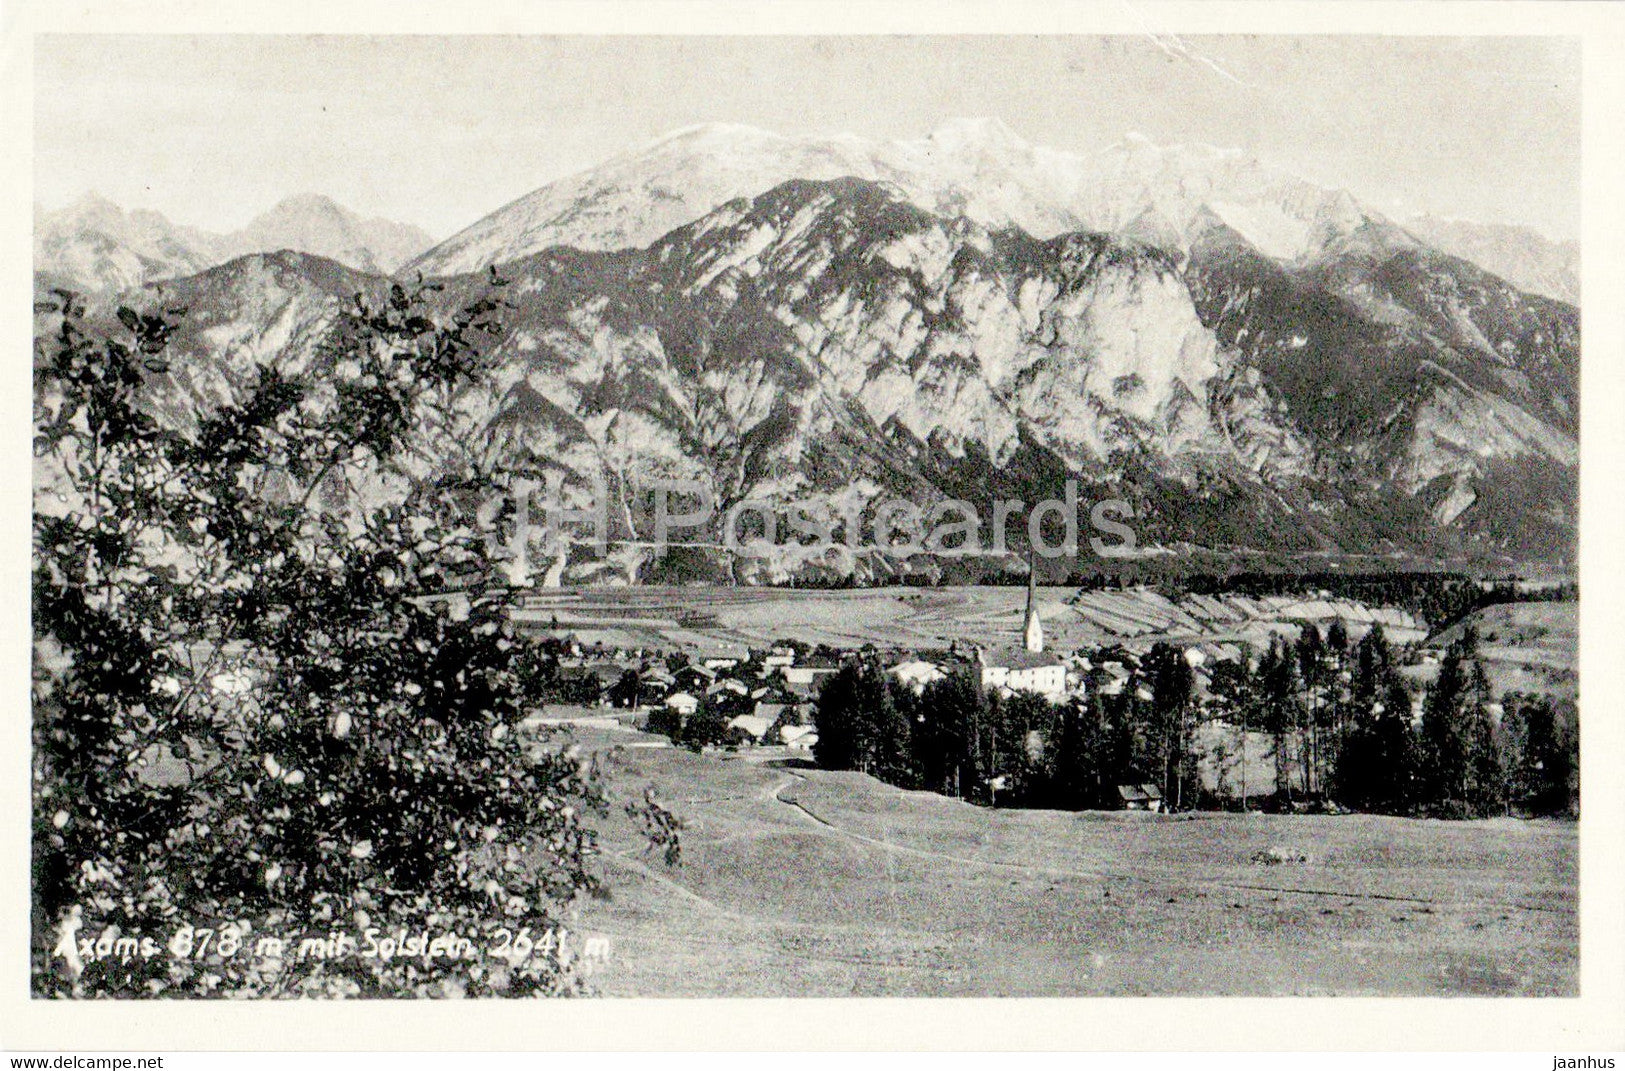 Axams - 878 m mit Solstein 2641 m - old postcard - Austria - unused - JH Postcards